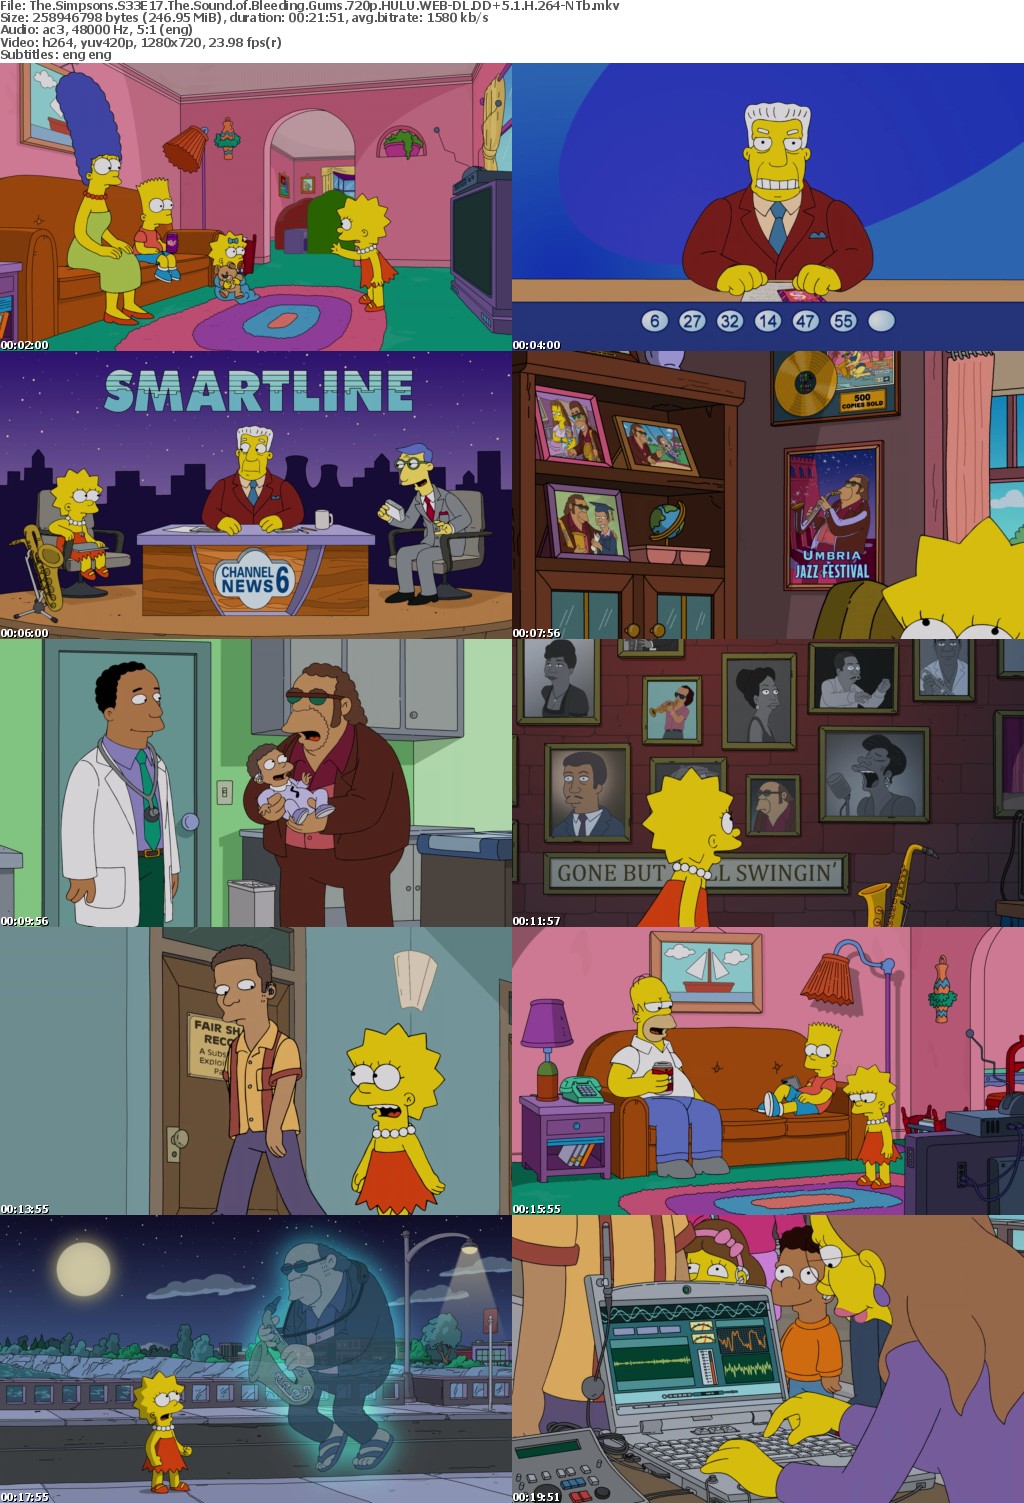 The Simpsons S33E17 The Sound of Bleeding Gums 720p HULU WEBRip DDP5 1 x264-NTb